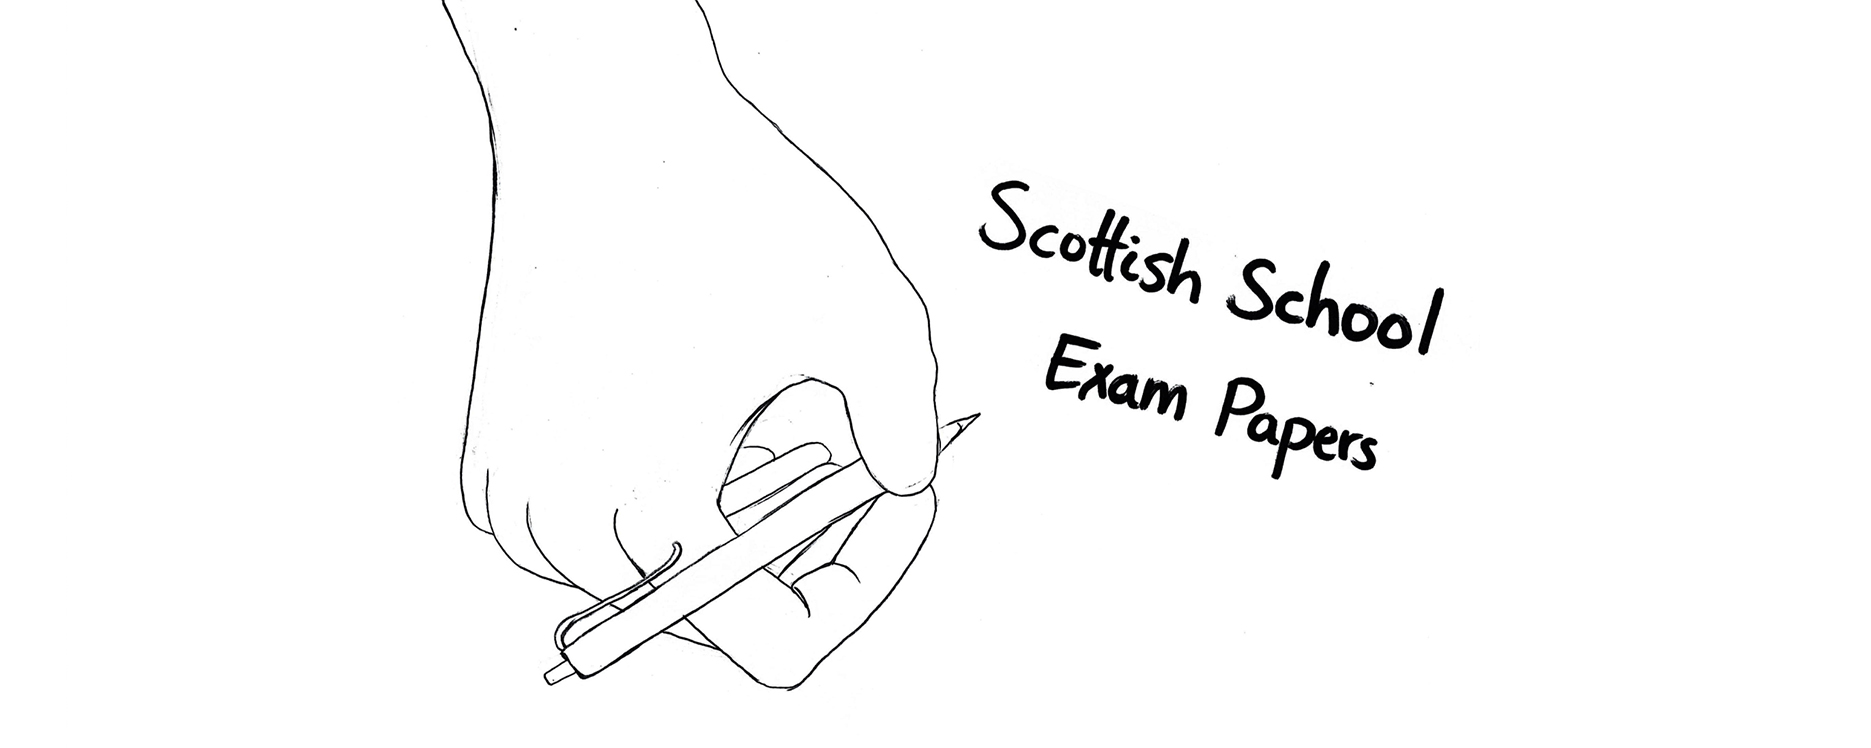 Scottish School Exam Papers - An Interactive Data Visualization Web Comic